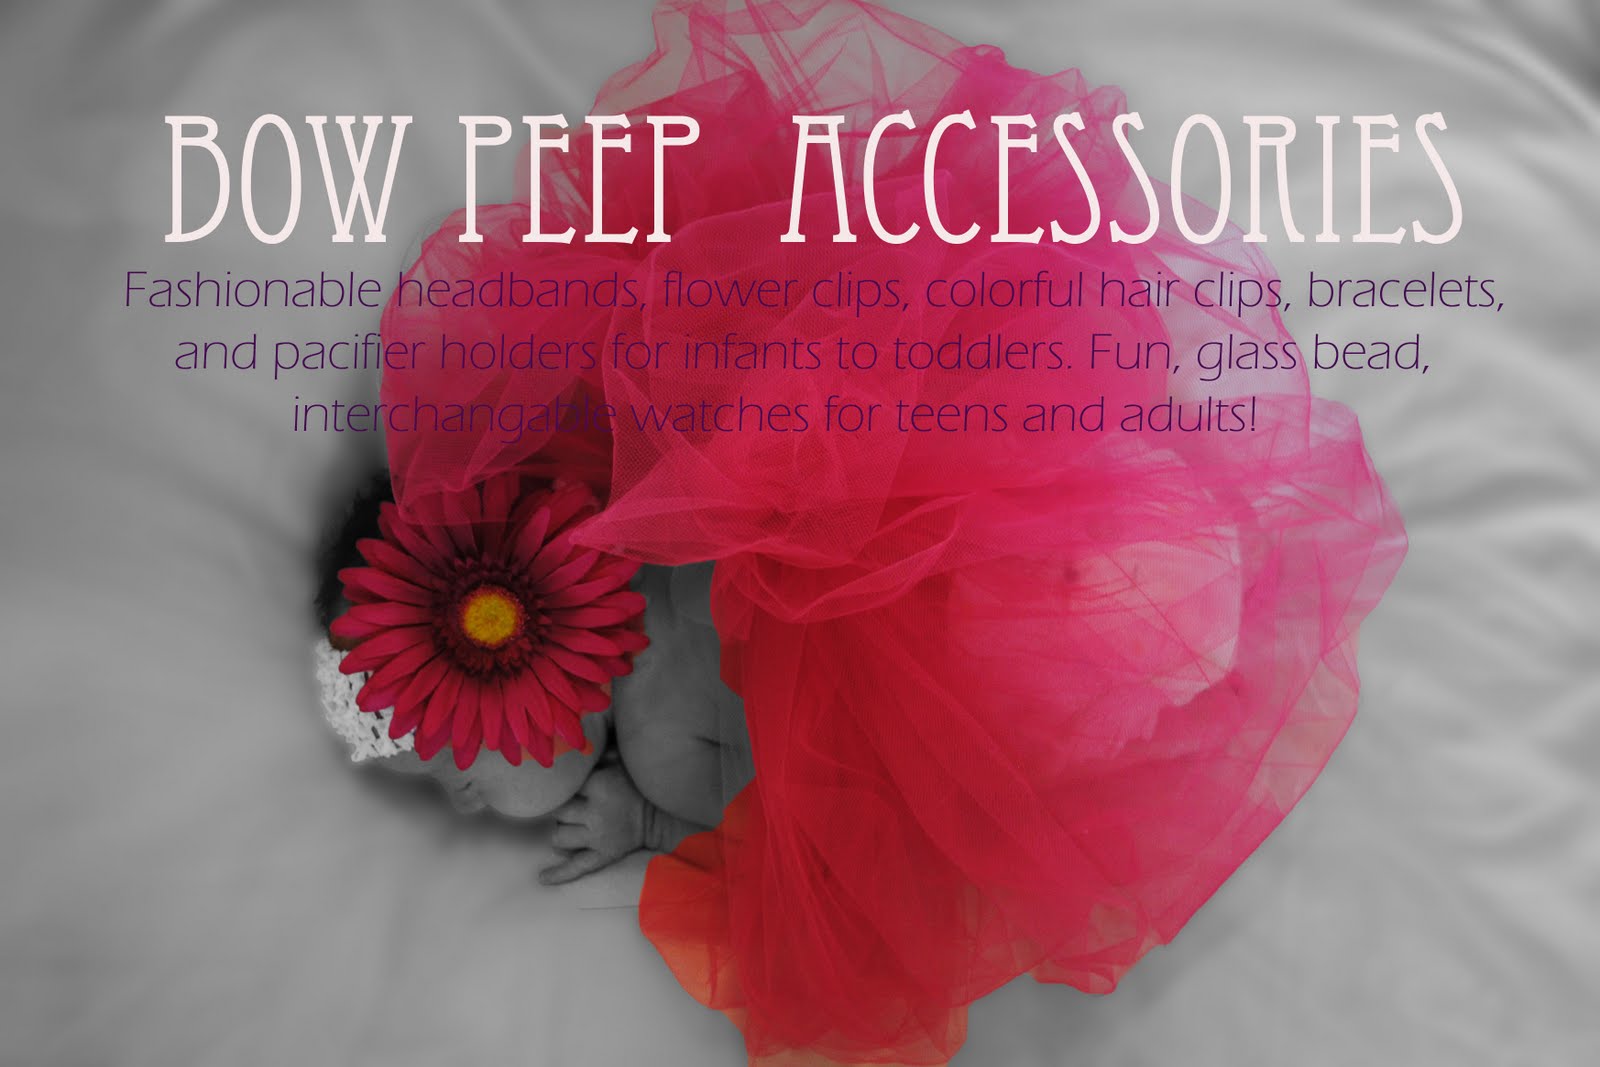 Bow Peep Accessories